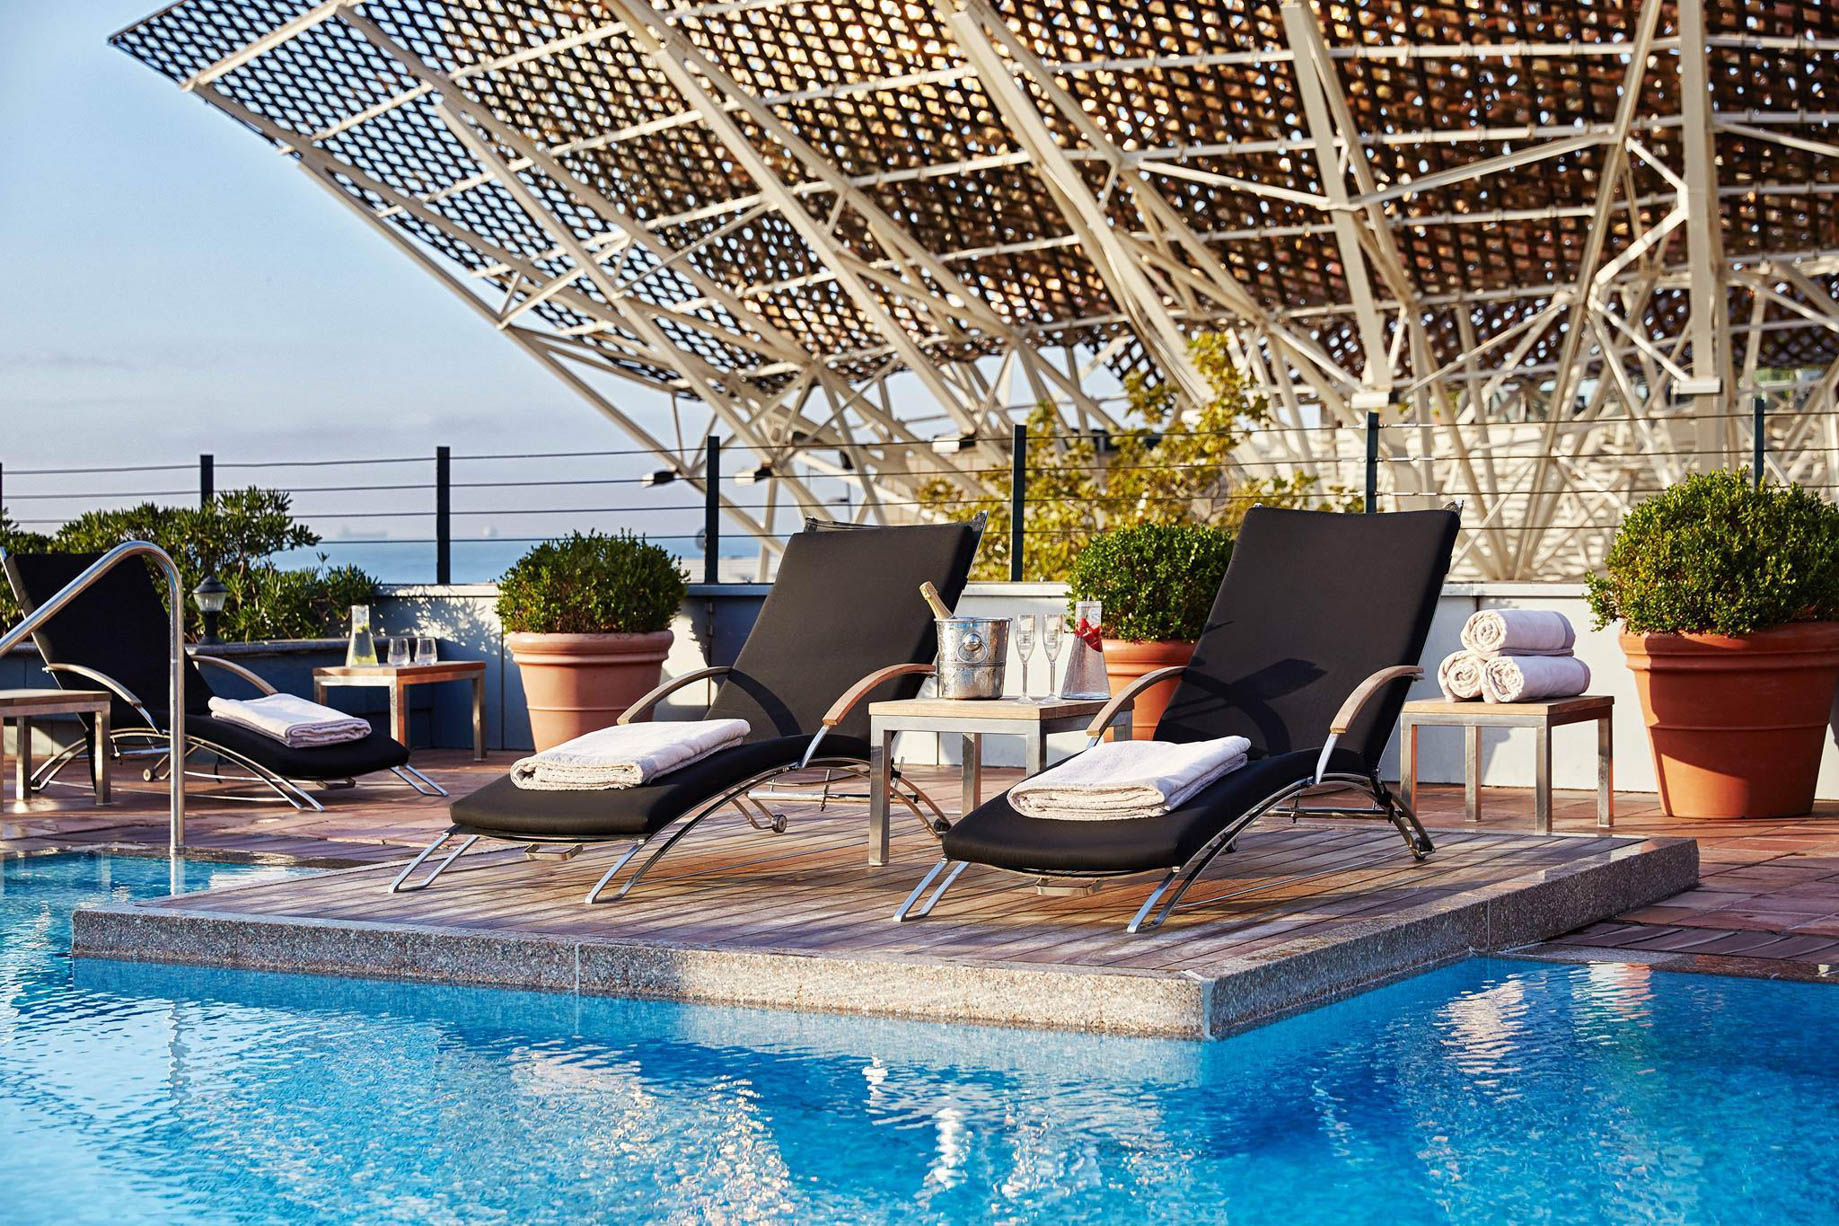 Hotel Arts Barcelona Ritz-Carlton - Barcelona, Spain - Exterior Pool Deck